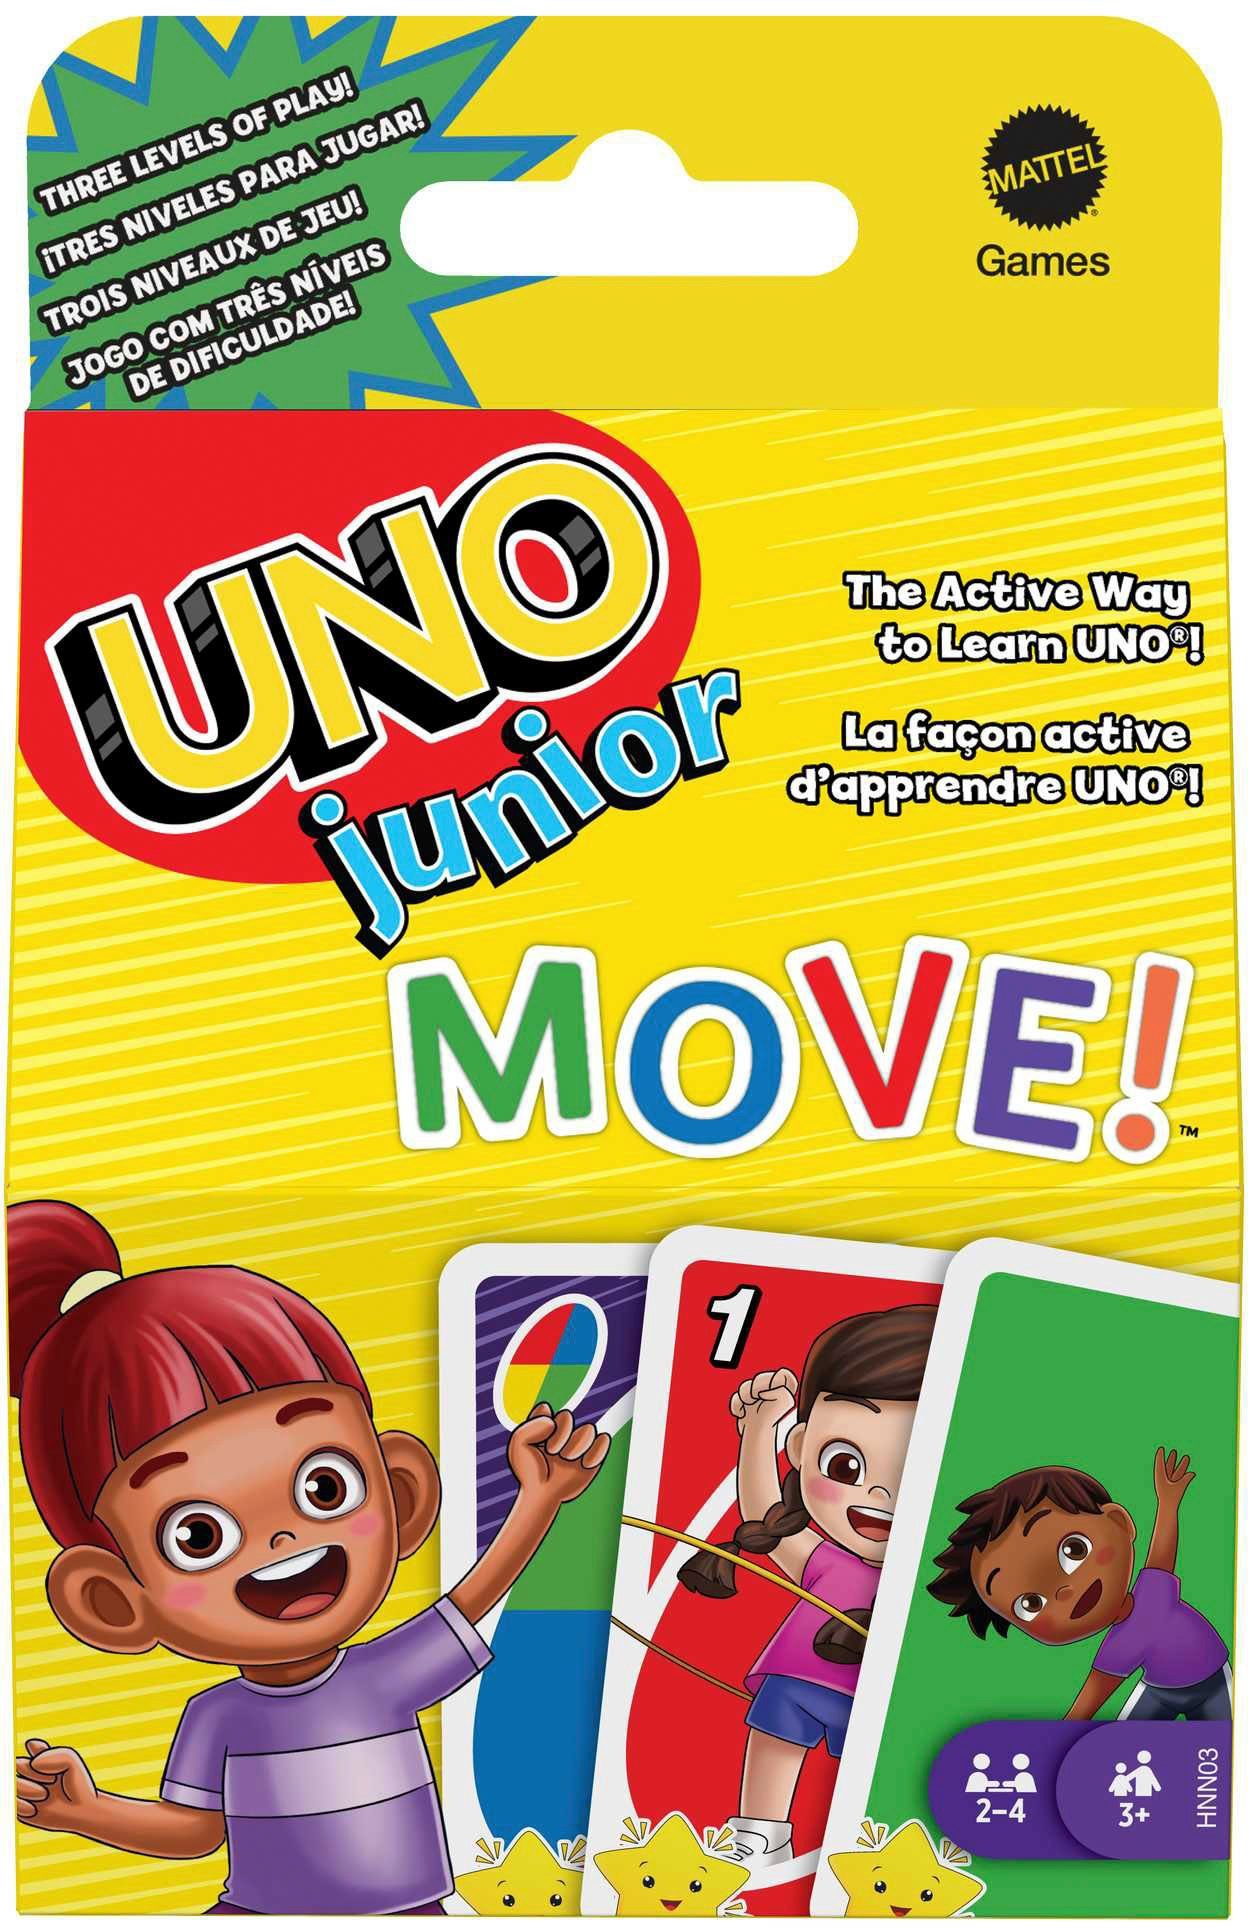 Mattel games Spiel, Kinderspiel UNO Junior Move